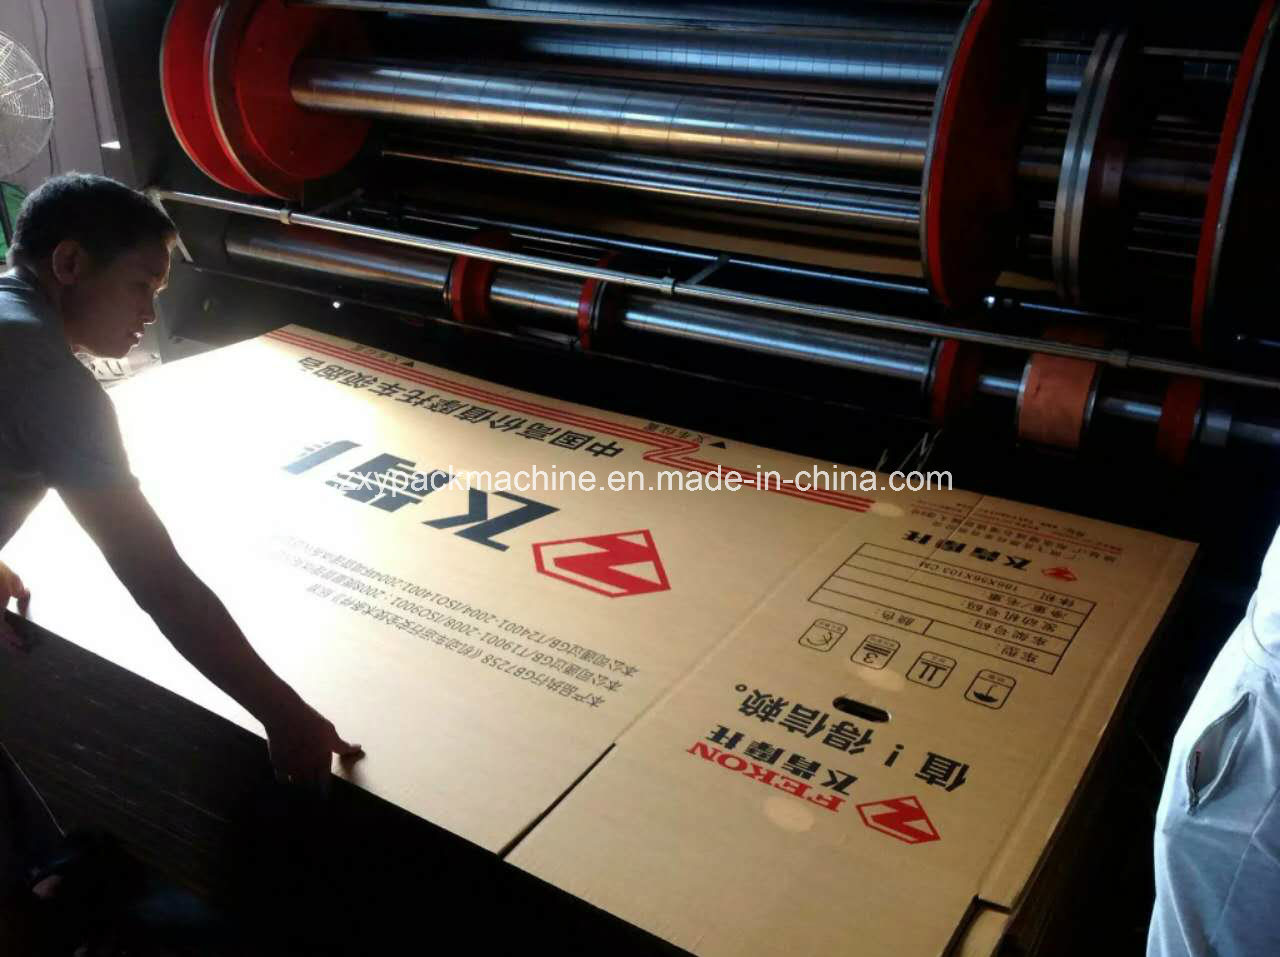 Automatic Corrugated Carton Flexo Printer Slotter Die-Cutter